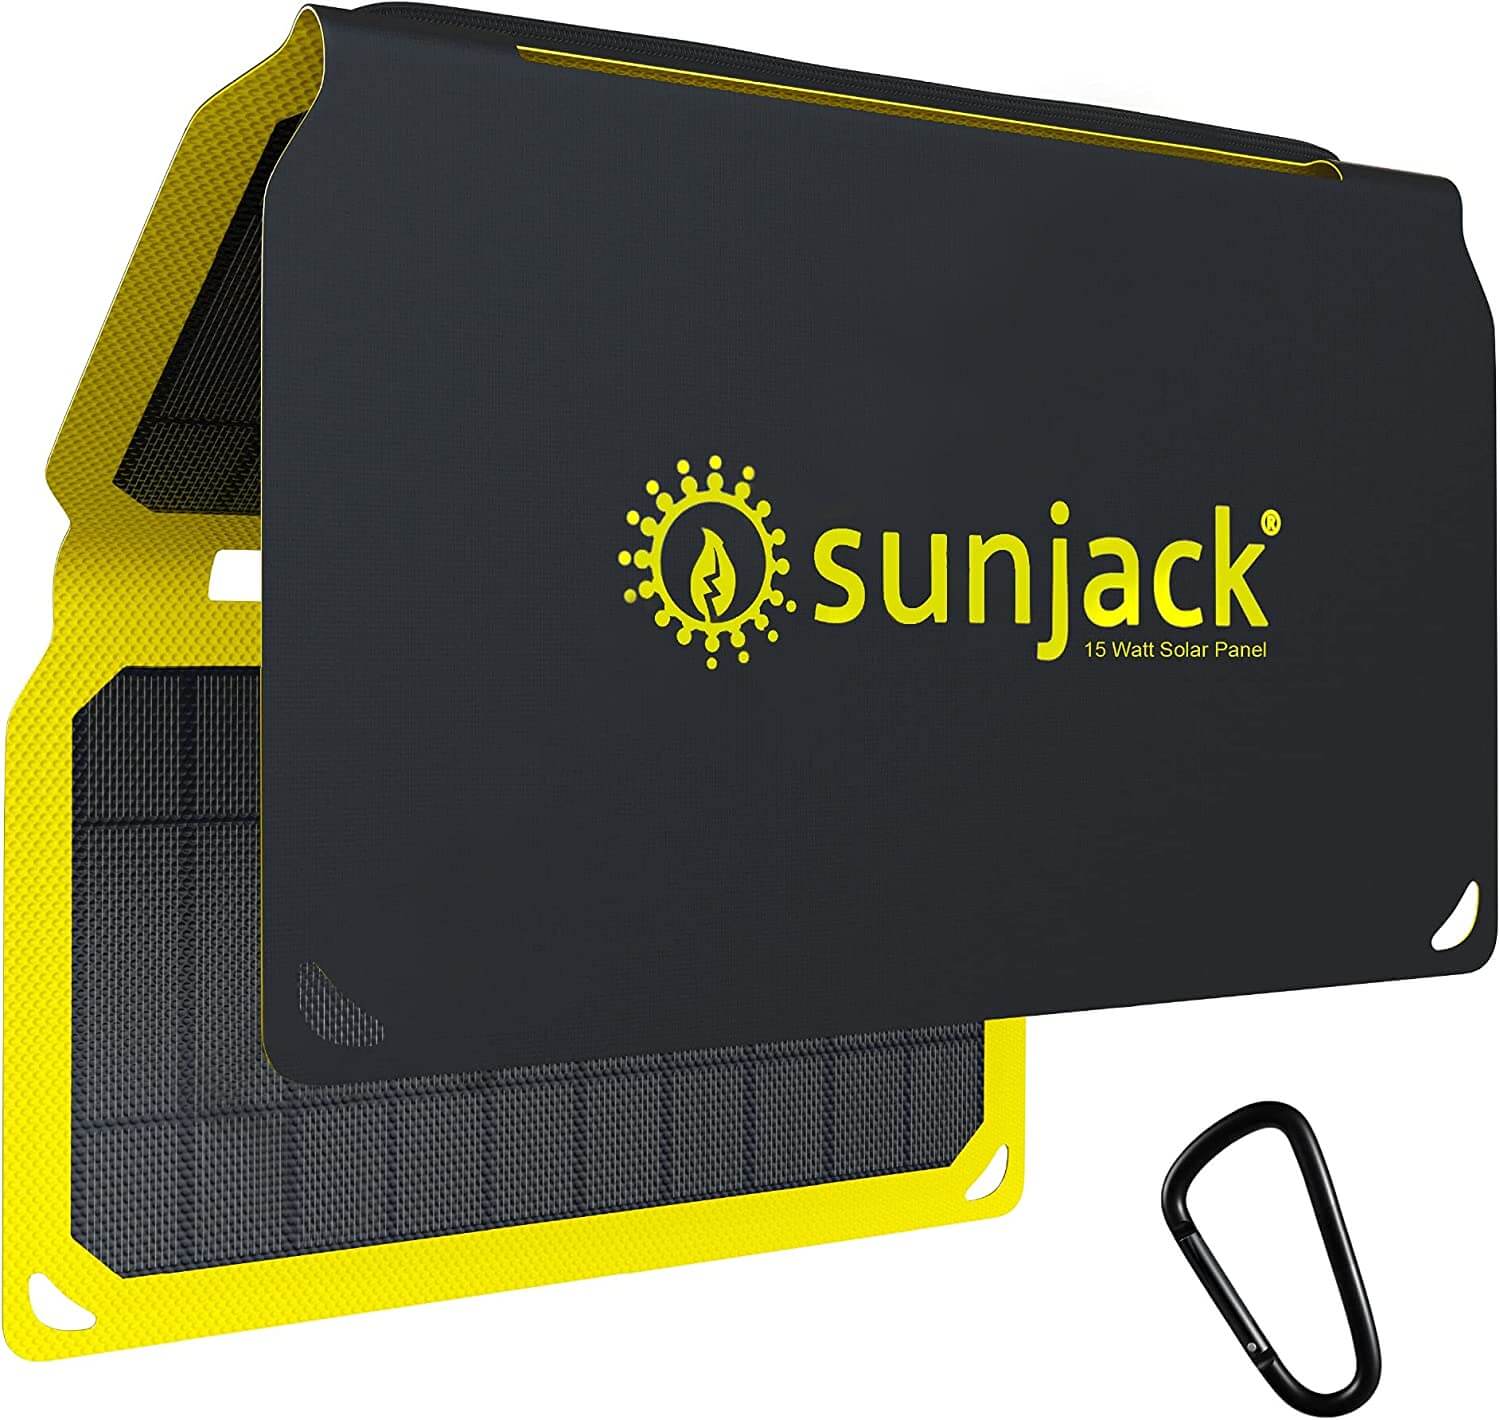 Sunjack 15 Watt Solar Panel Charger